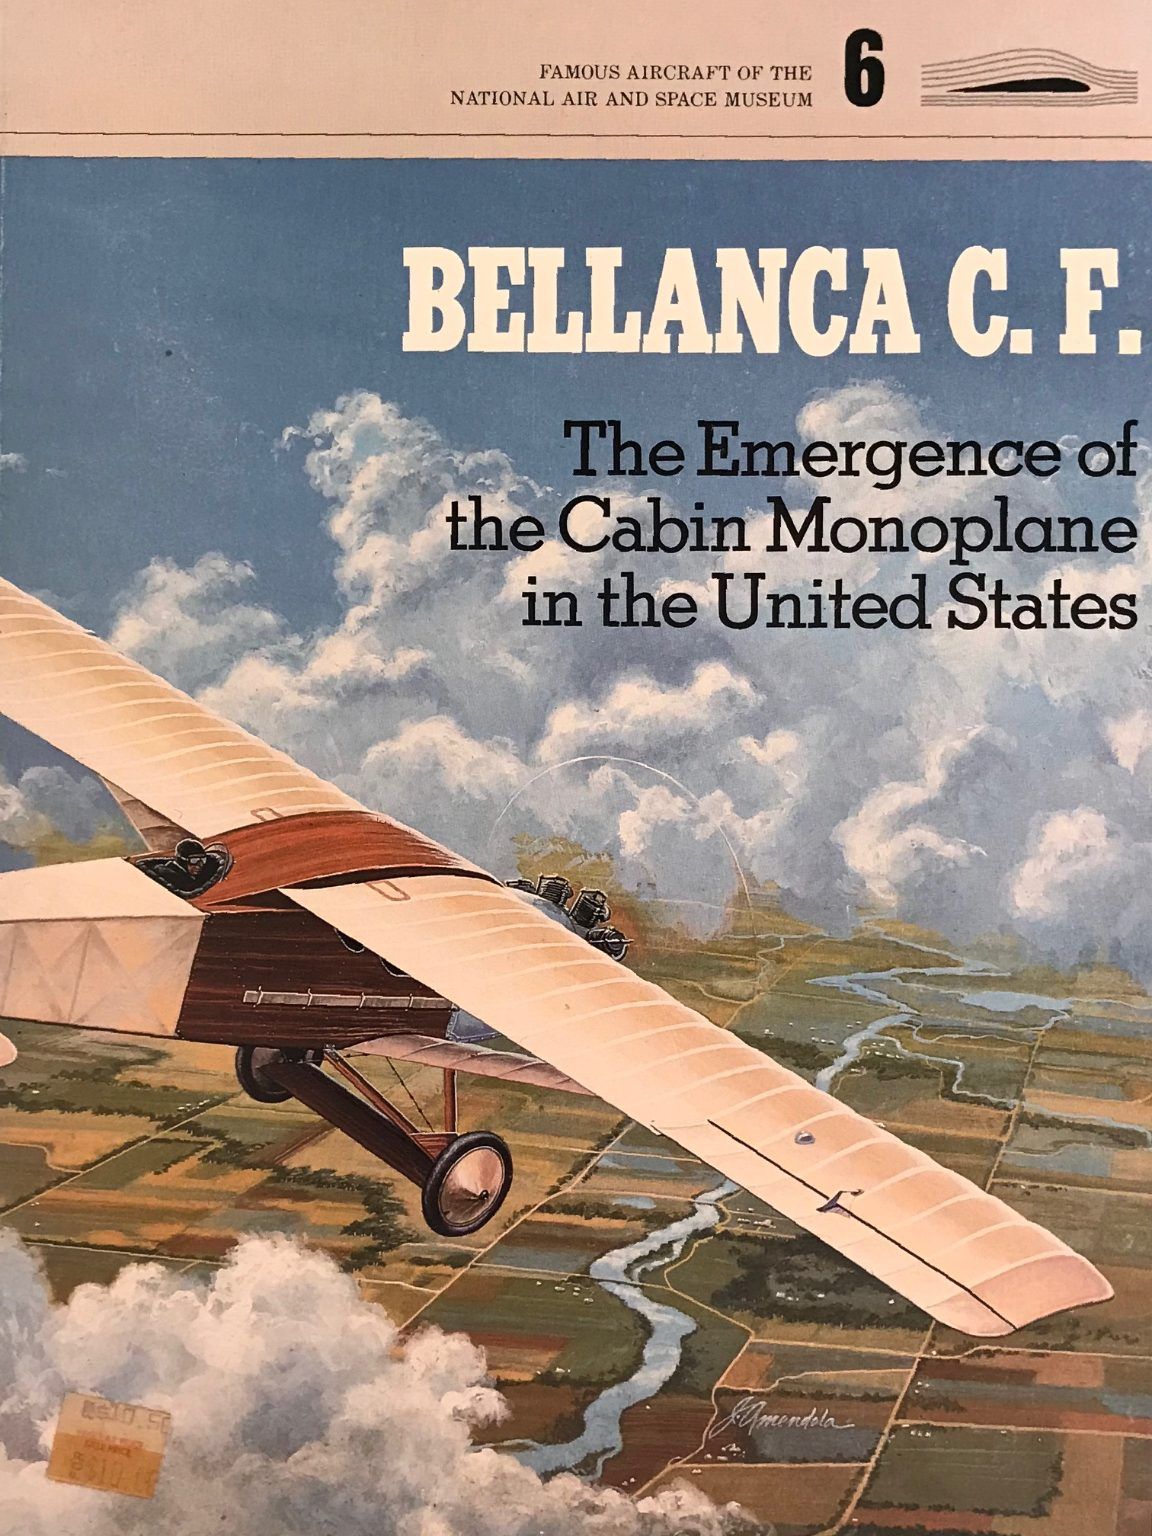 BELLANCA D.F. - The Cabin Monoplane In The United States